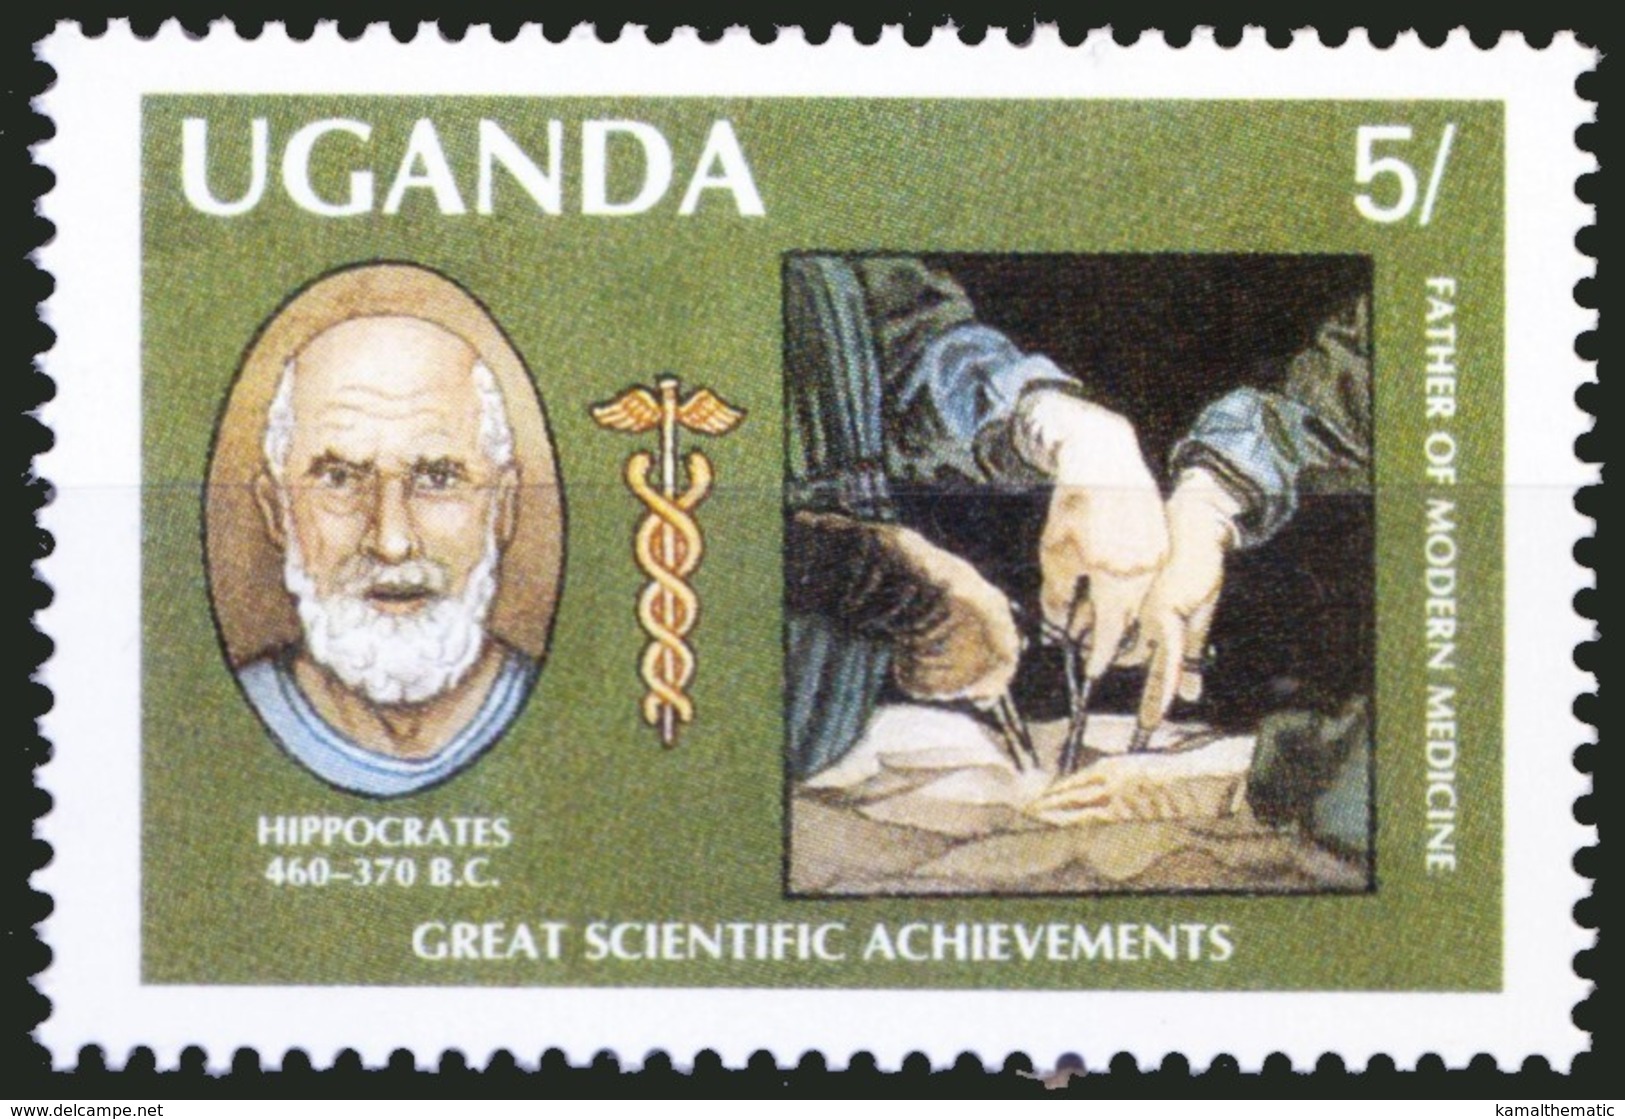 Hippocrates Father Of Modern Medicine, Uganda 1987 MNH - - Medizin